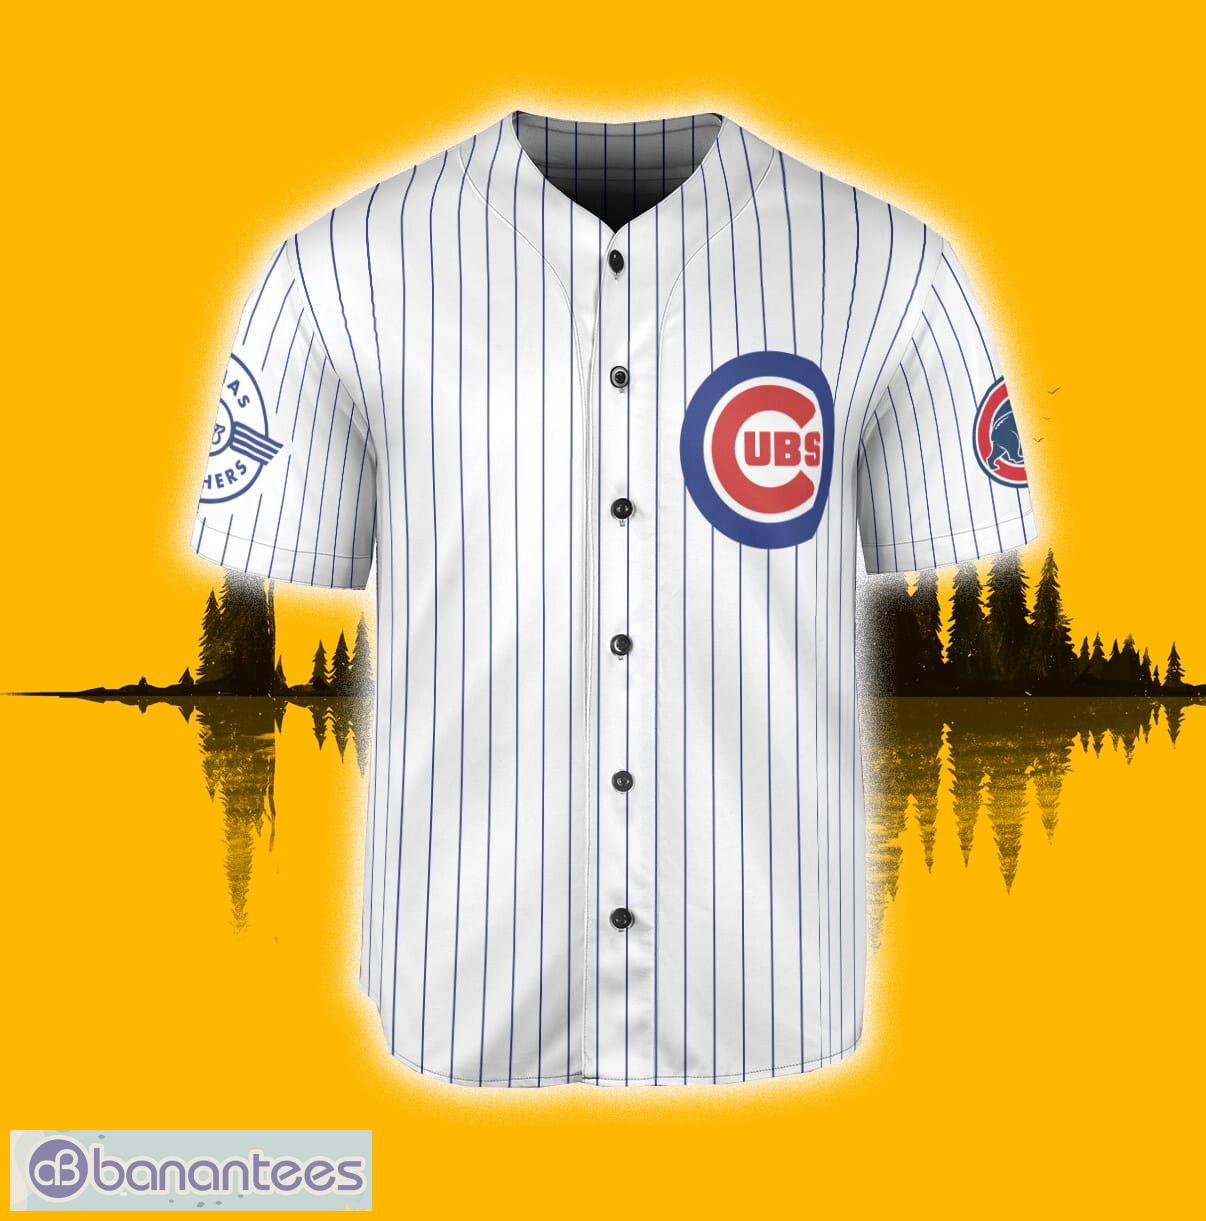 Chicago Cubs N. Jonas Jersey Baseball Shirt Gray Custom Number And